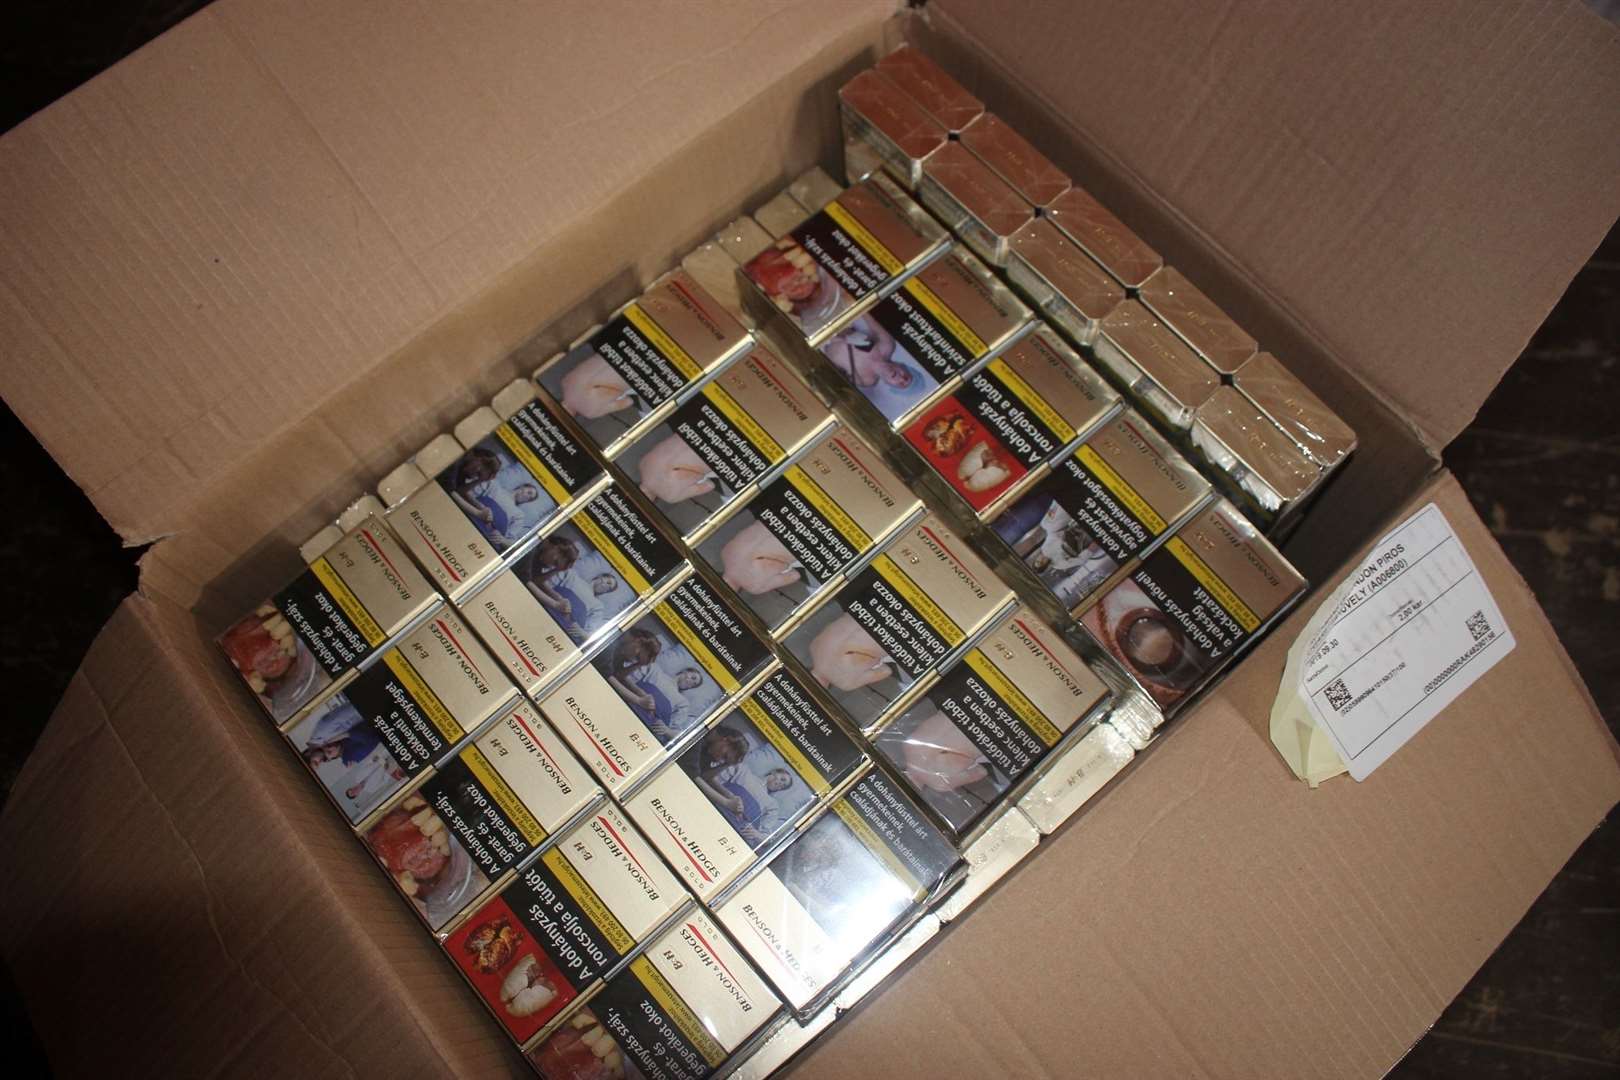 A quantity of the smuggled cigarettes. Picture: HMRC